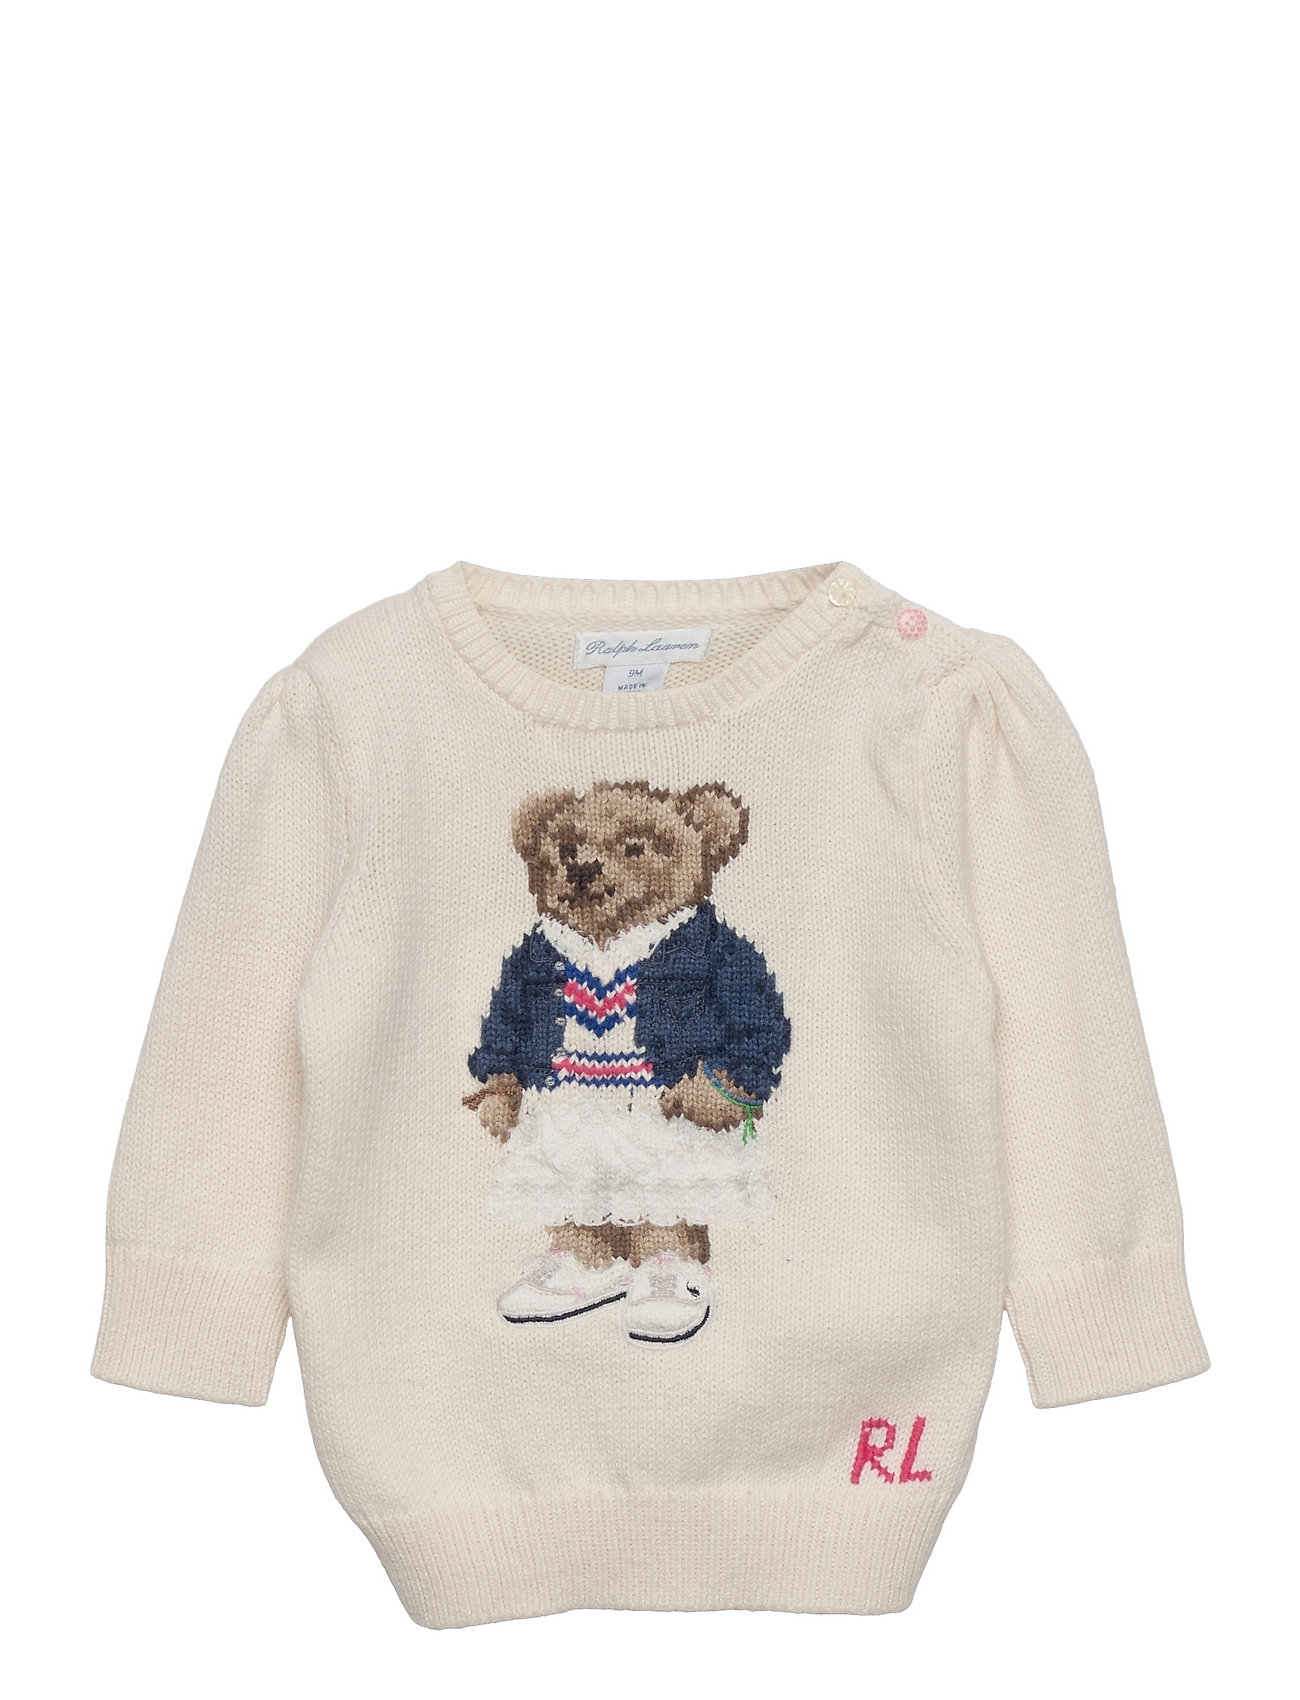 Ralph Lauren Baby Polo Bear Cotton Sweater - Tops 